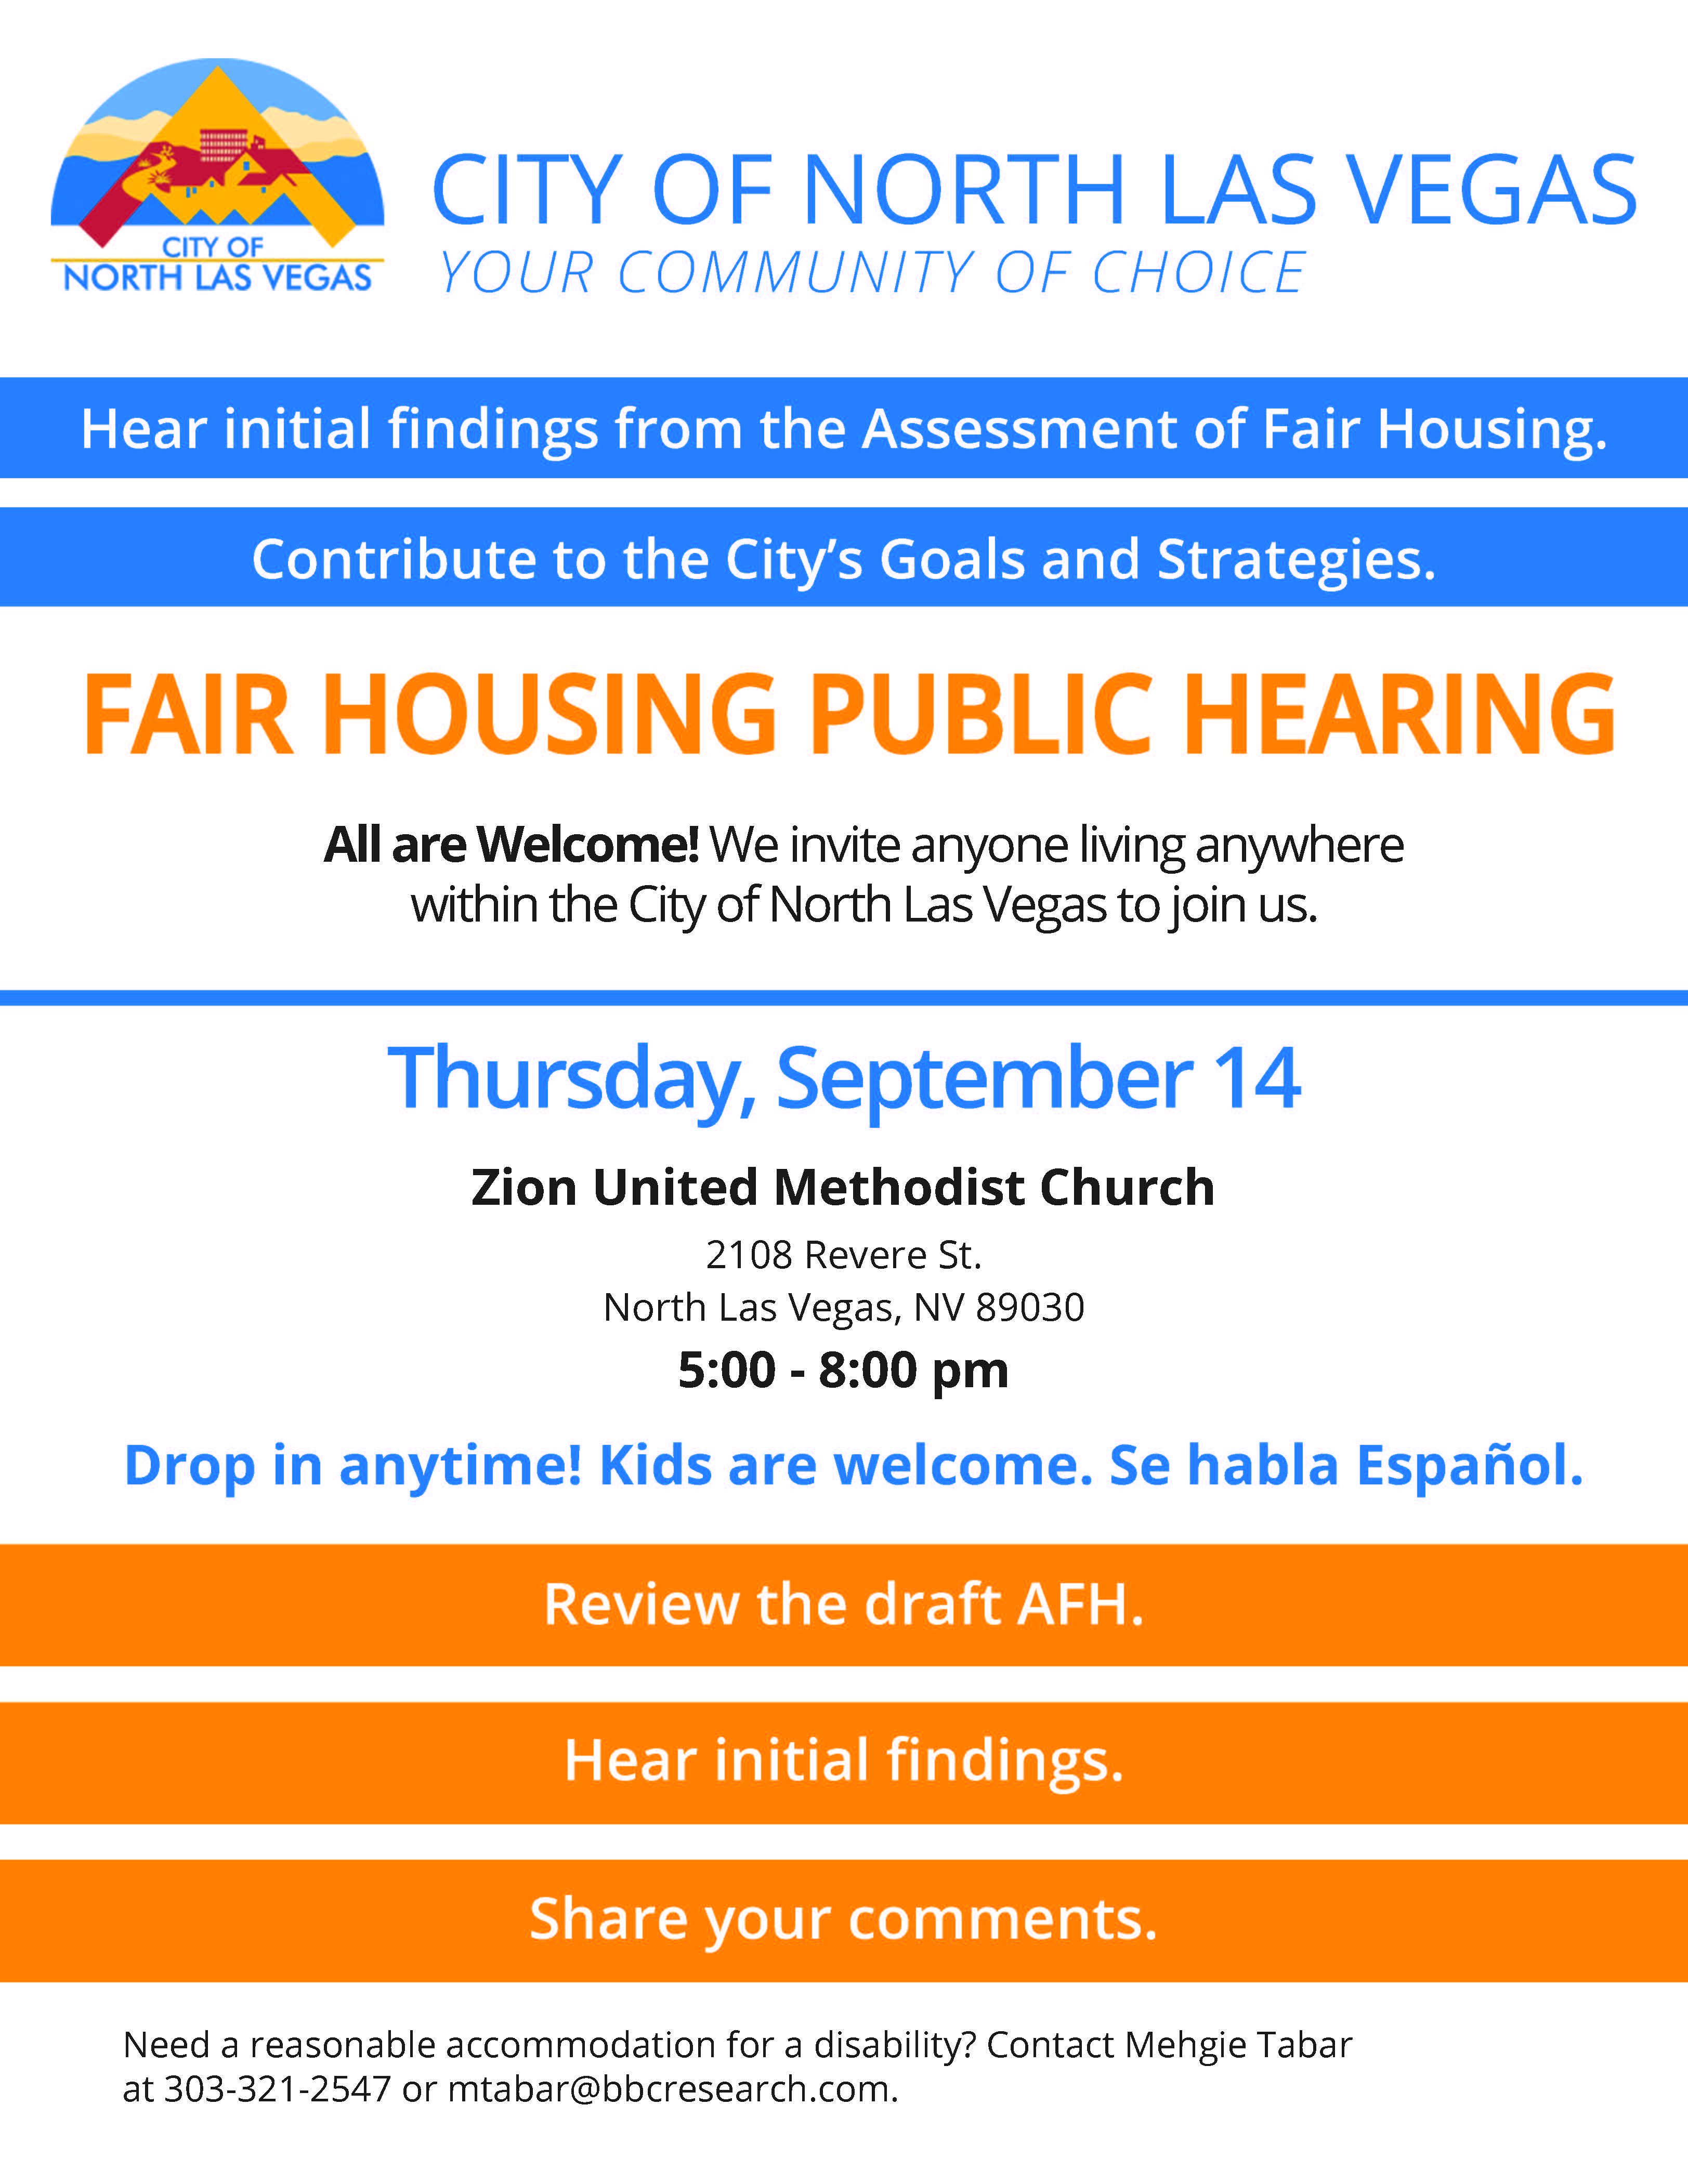 CNLV AFH Public Hearing Flyer_English